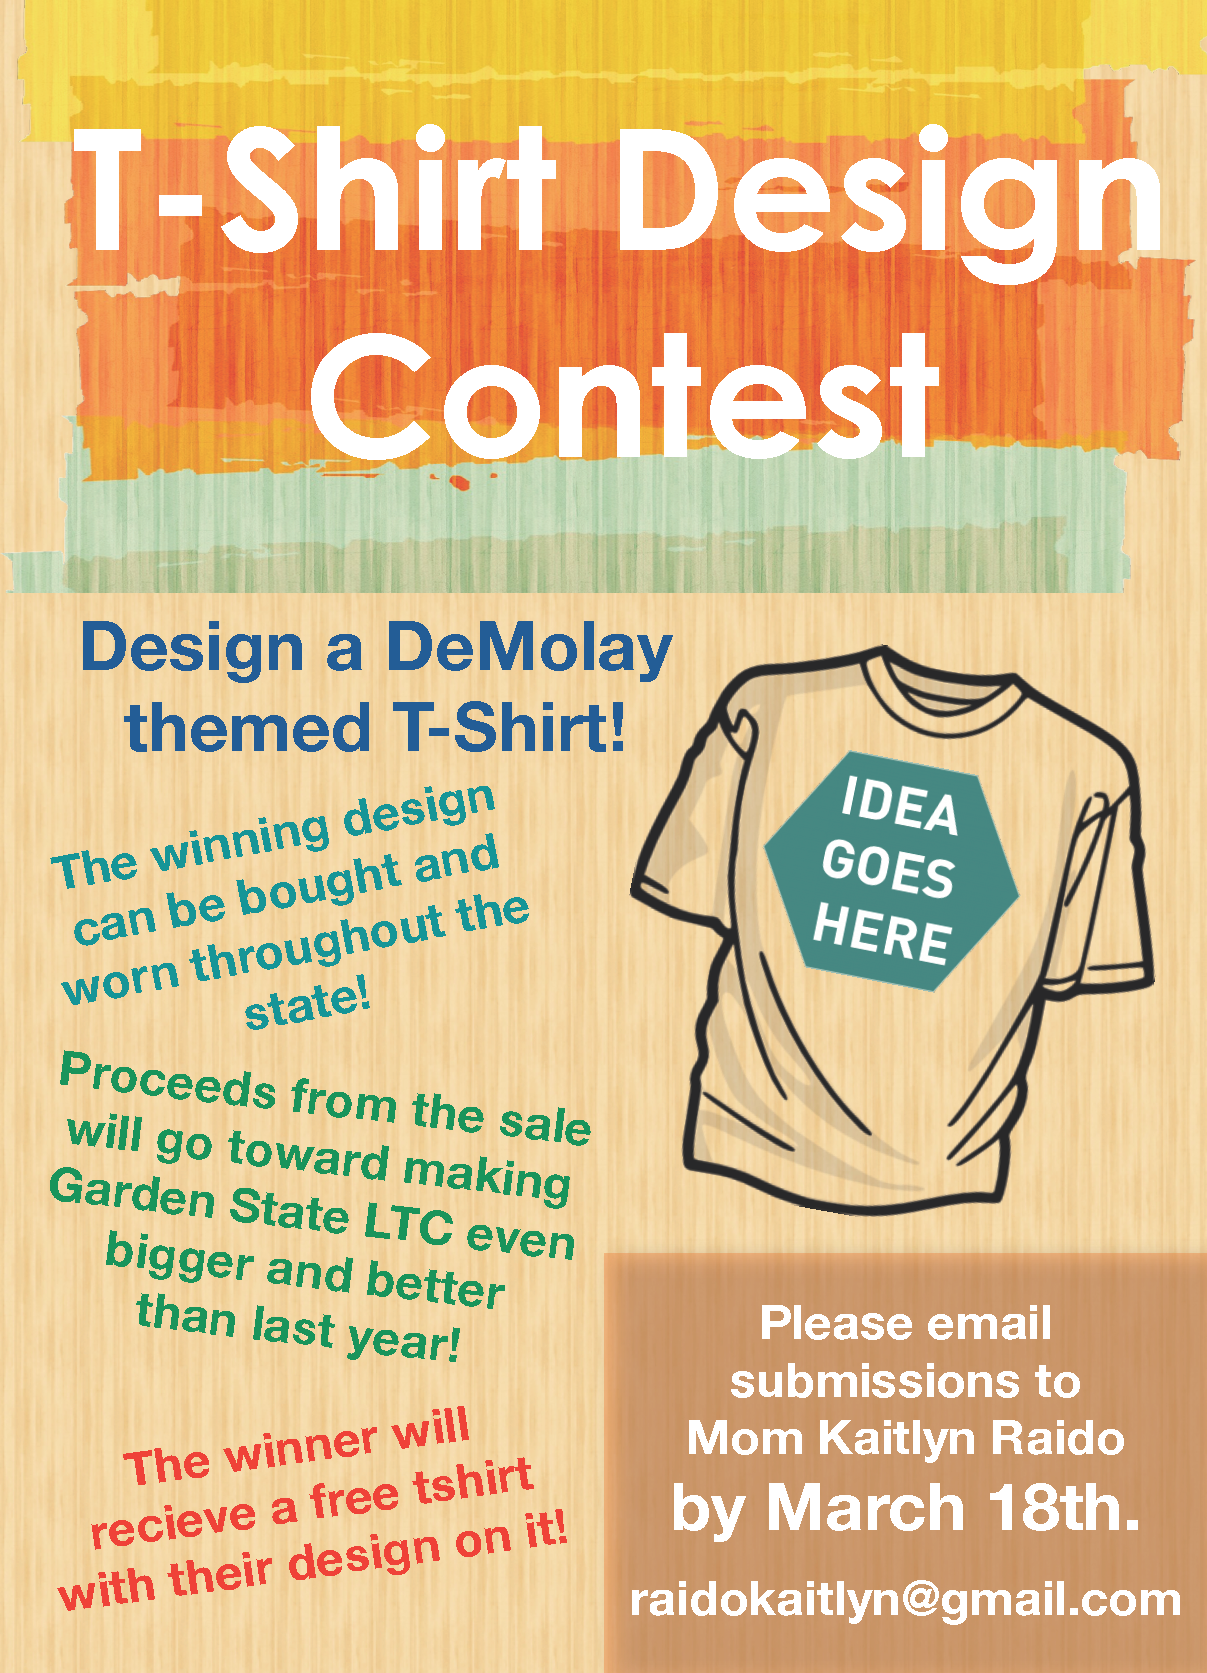 t-shirt-design-contest-nj-demolay